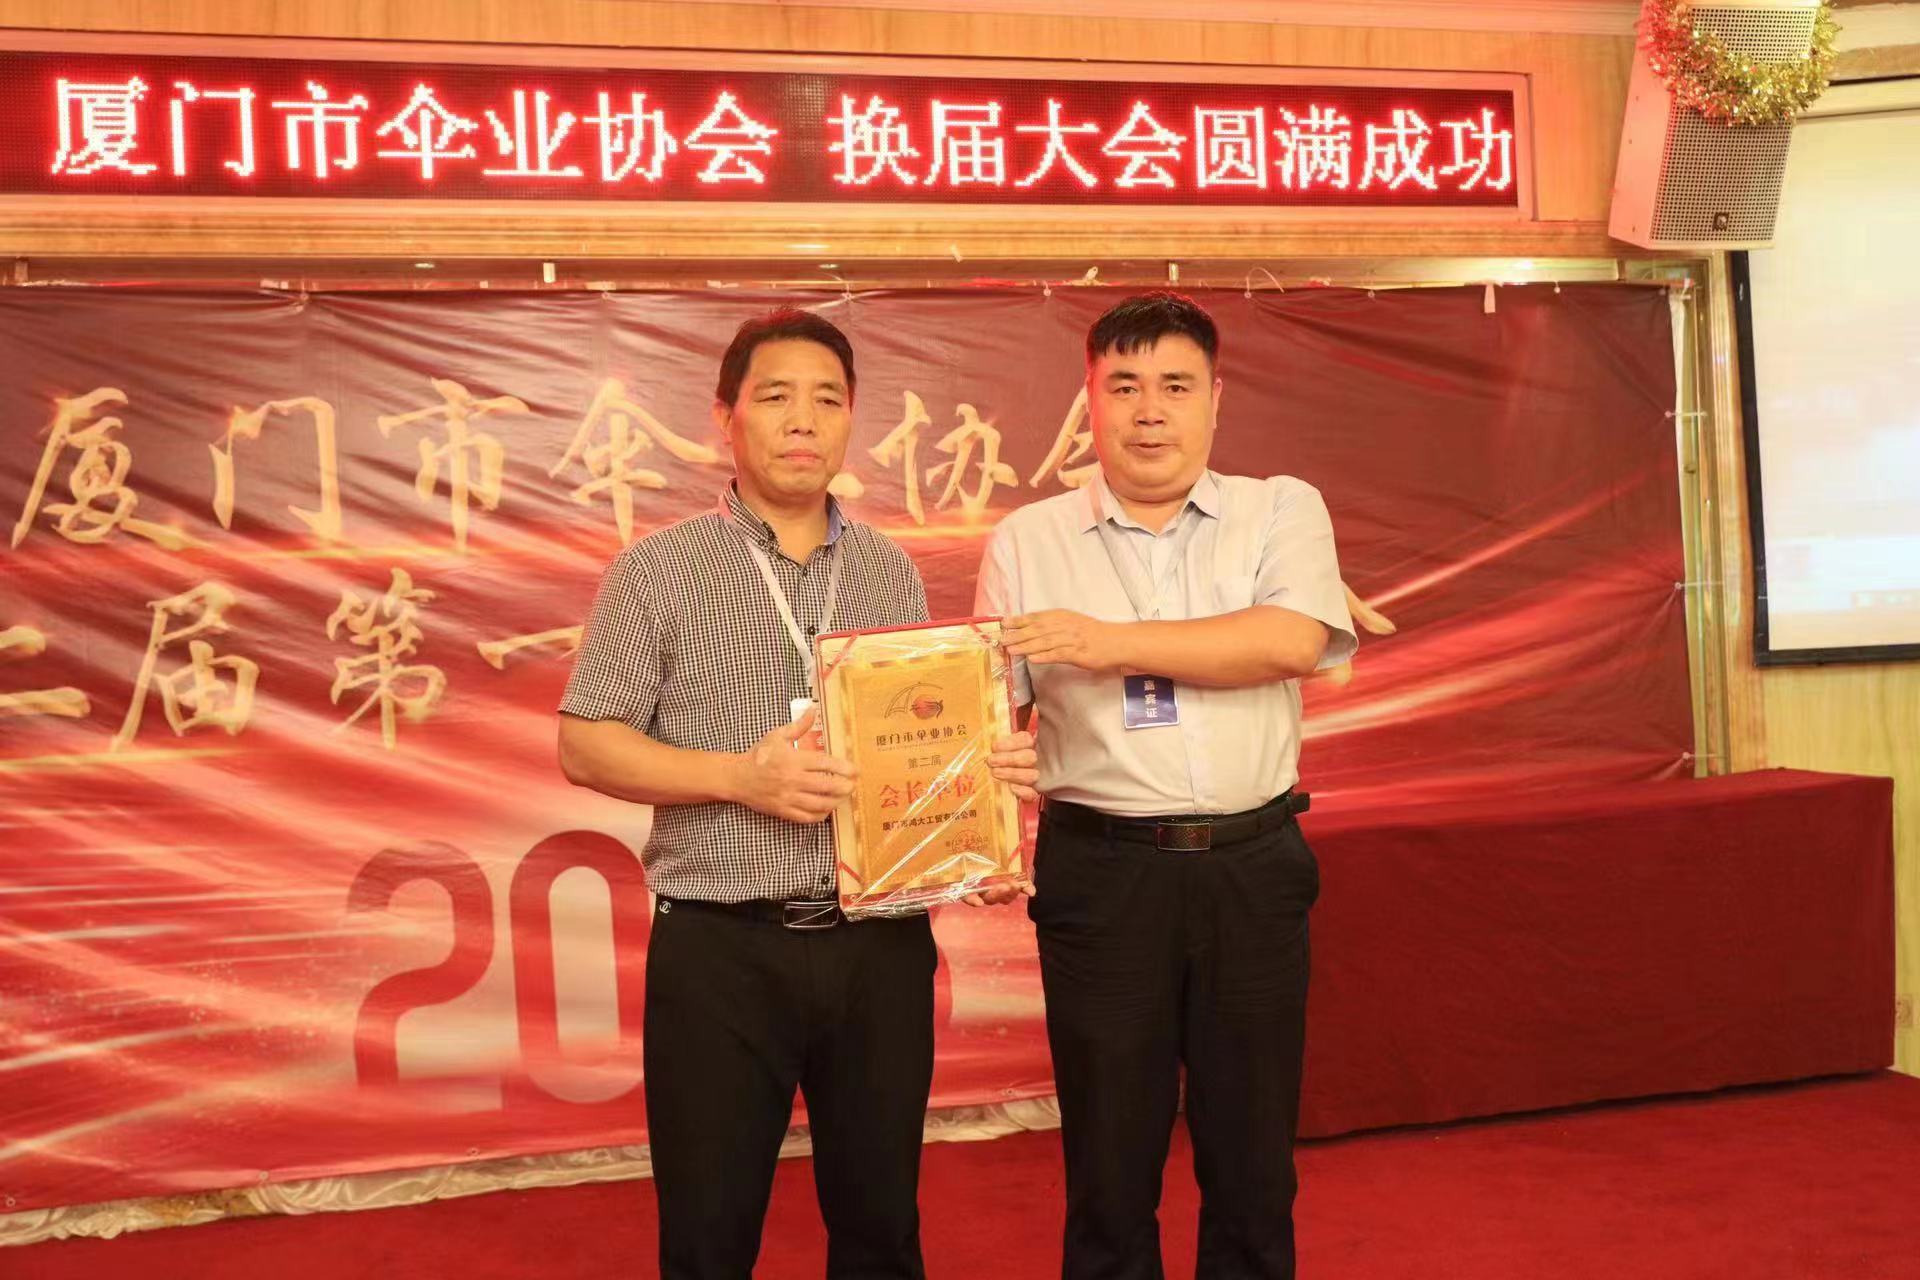 The new Board of Directors were elected for the Xiamen Umbrella Association.